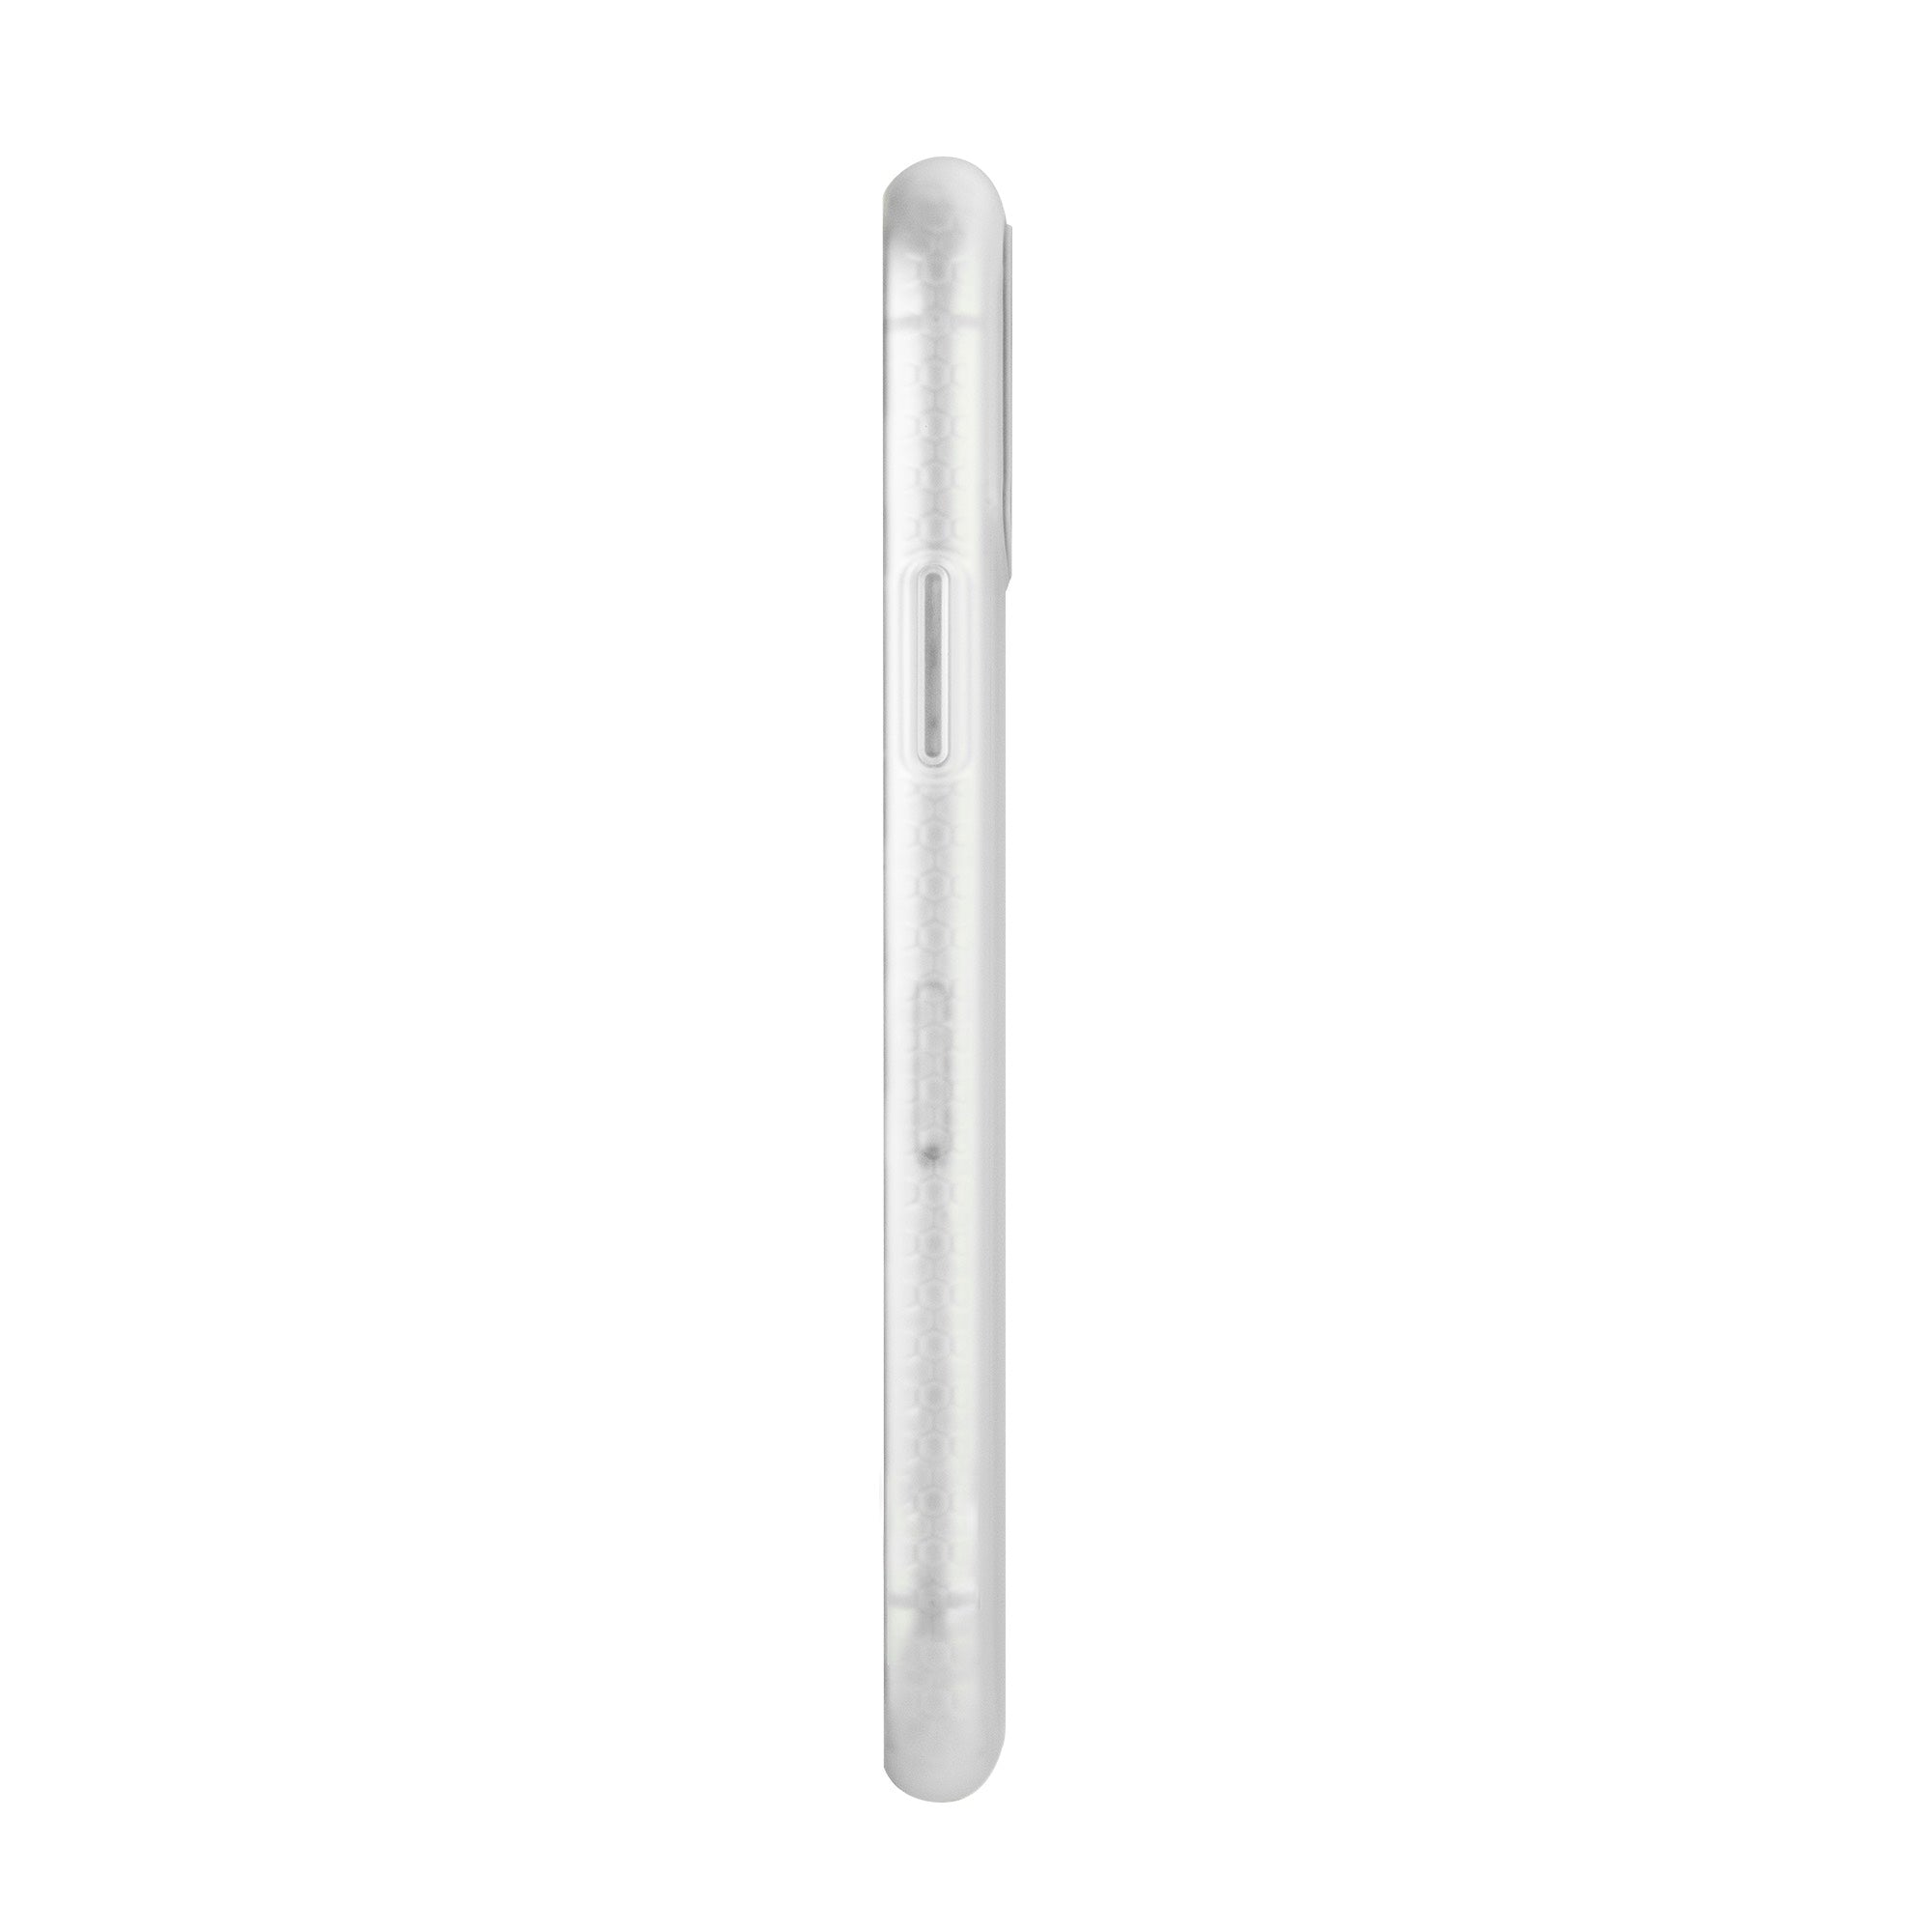 Aero iPhone 11 - White